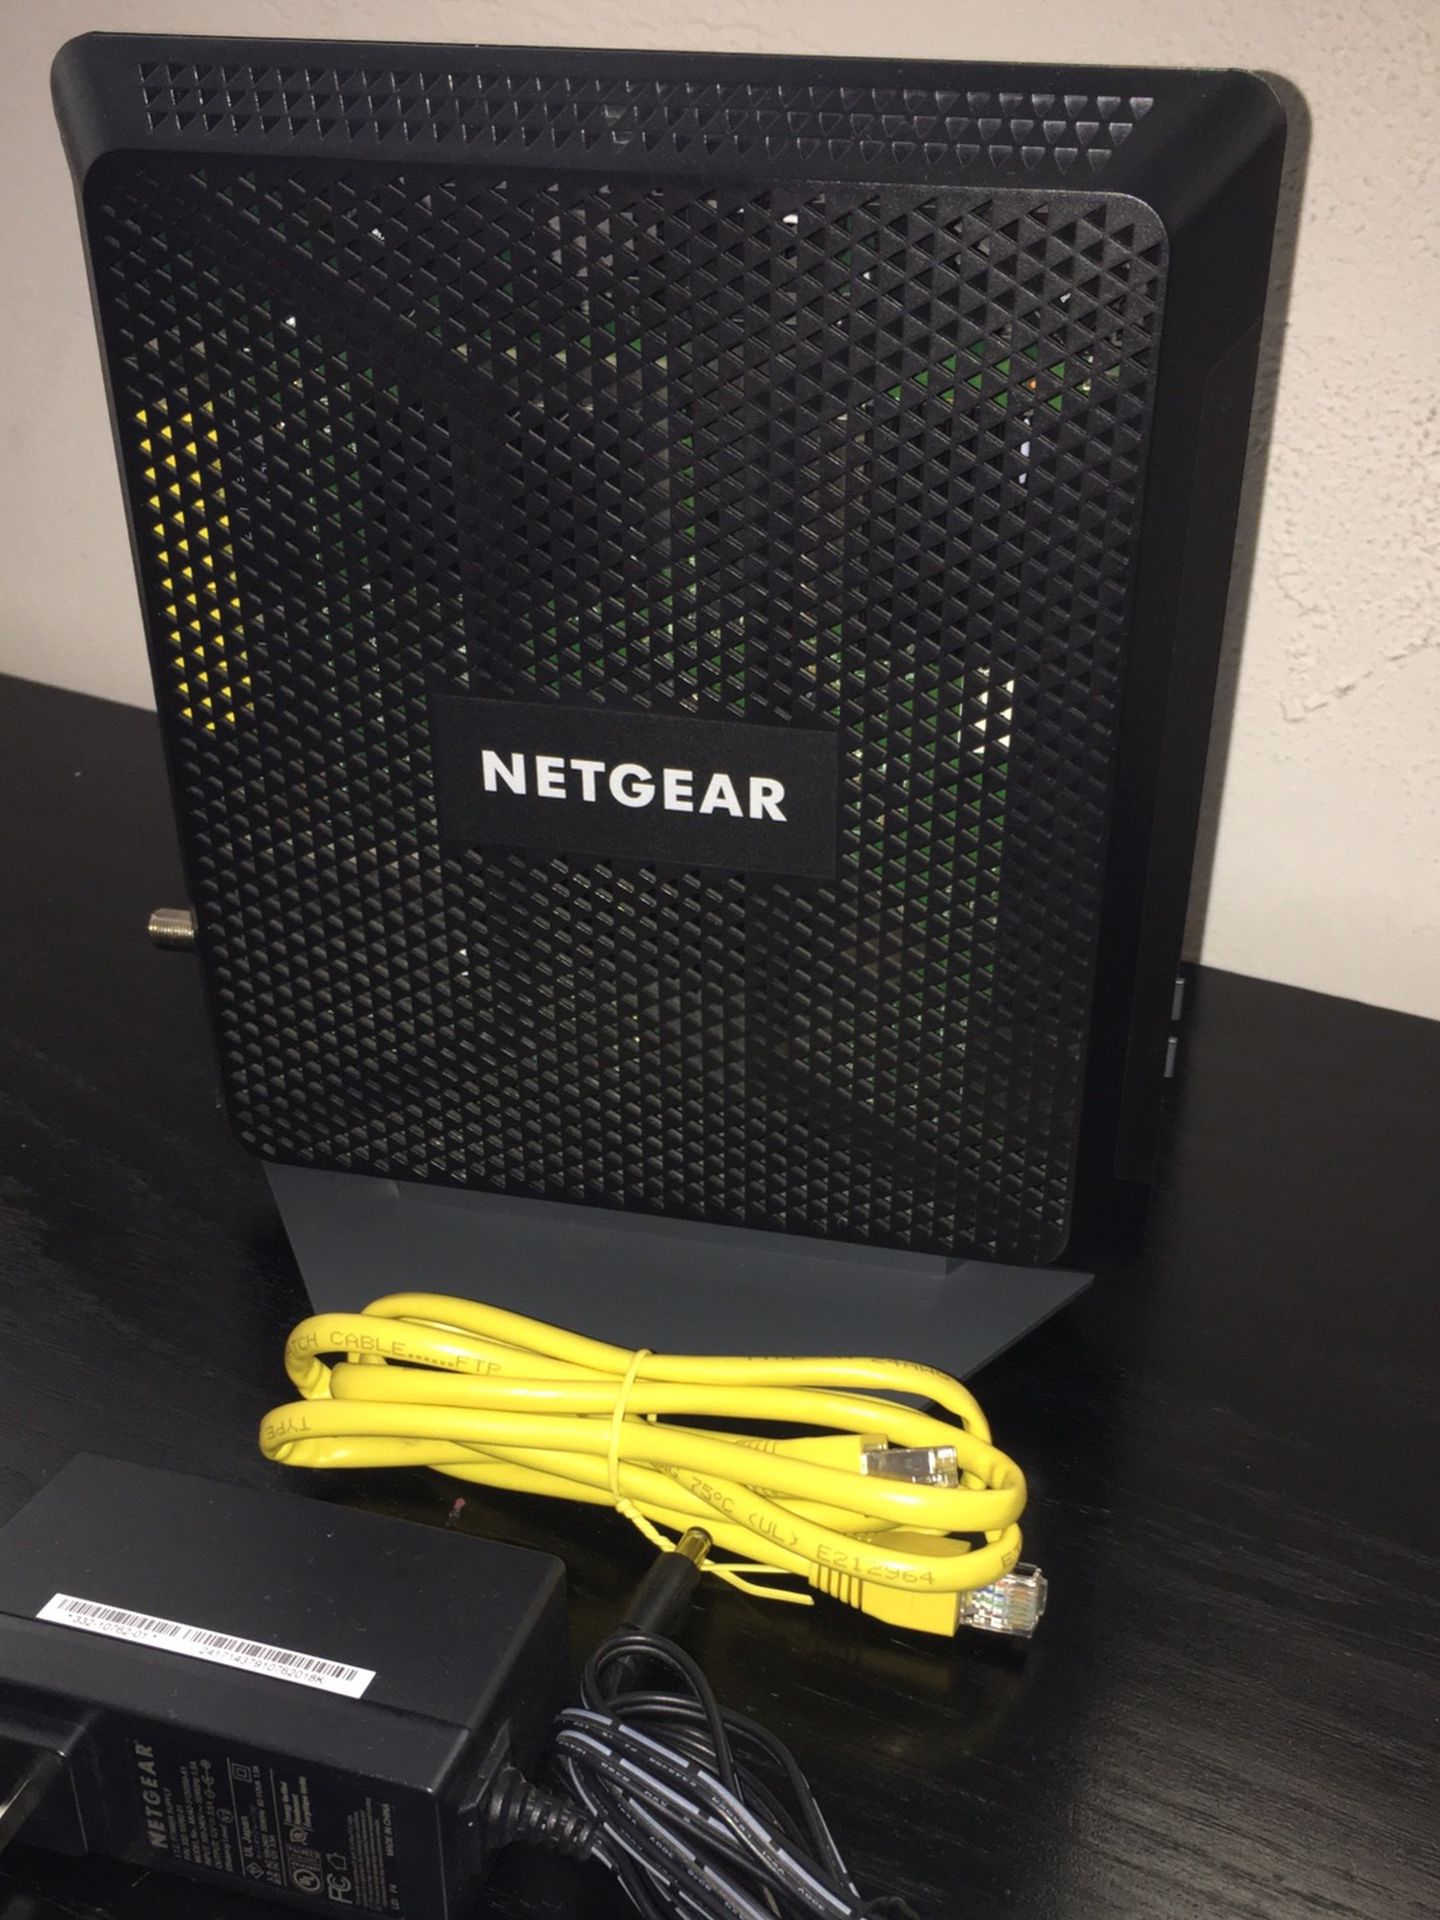 Netgear nighthawk AC1900 C7000v2 modem and router